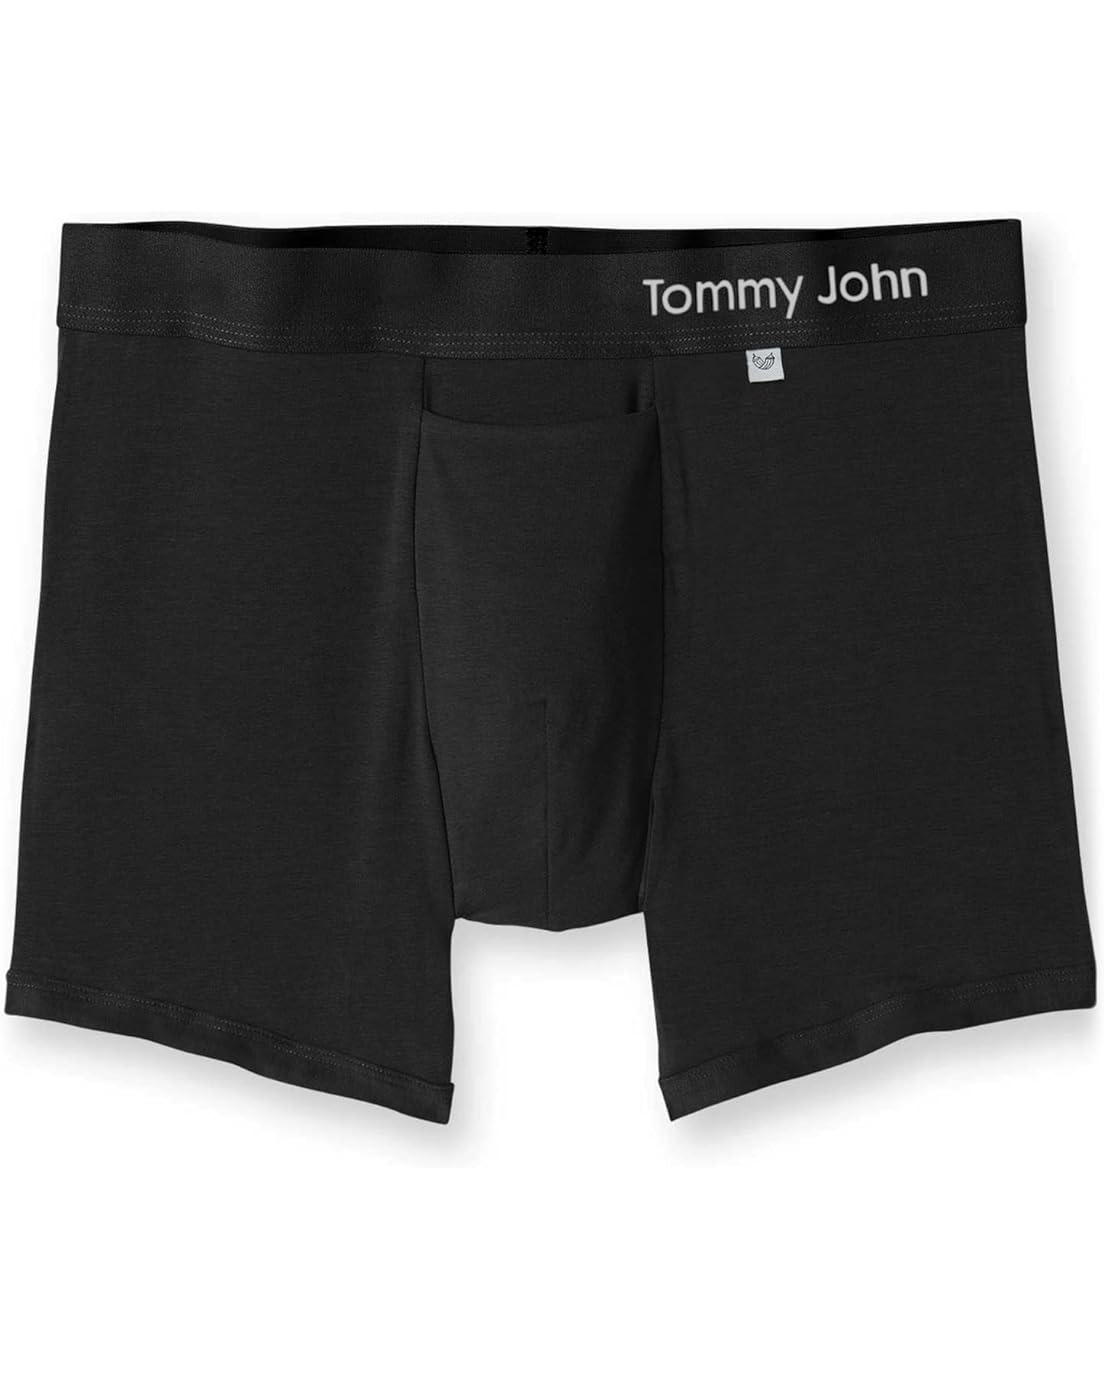  Tommy John Cool Cotton Hammock Pouch Trunks 4